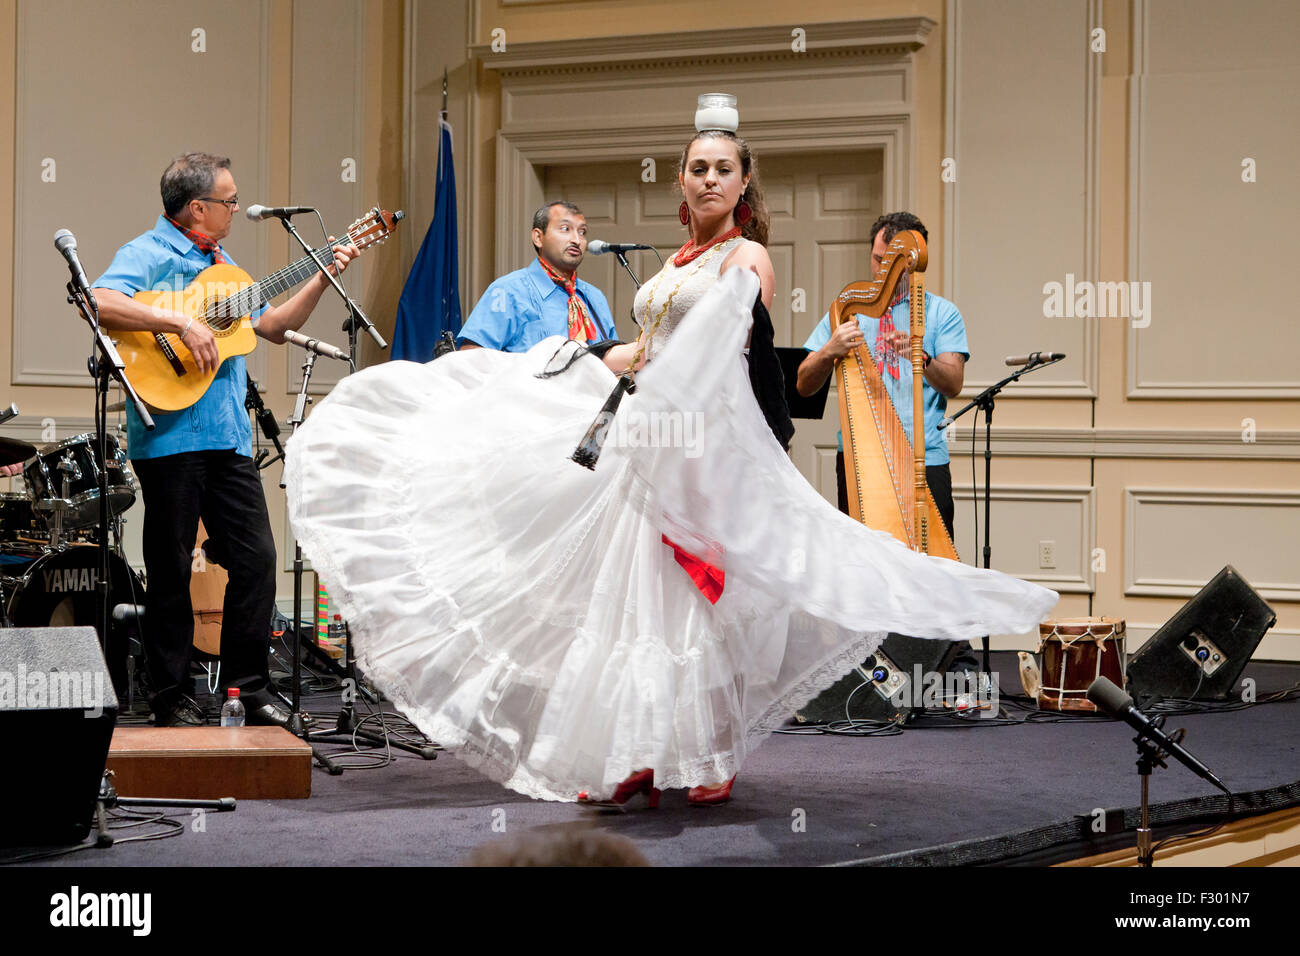 Woman performing La Bruja, Mexican folk dance Stock Photo